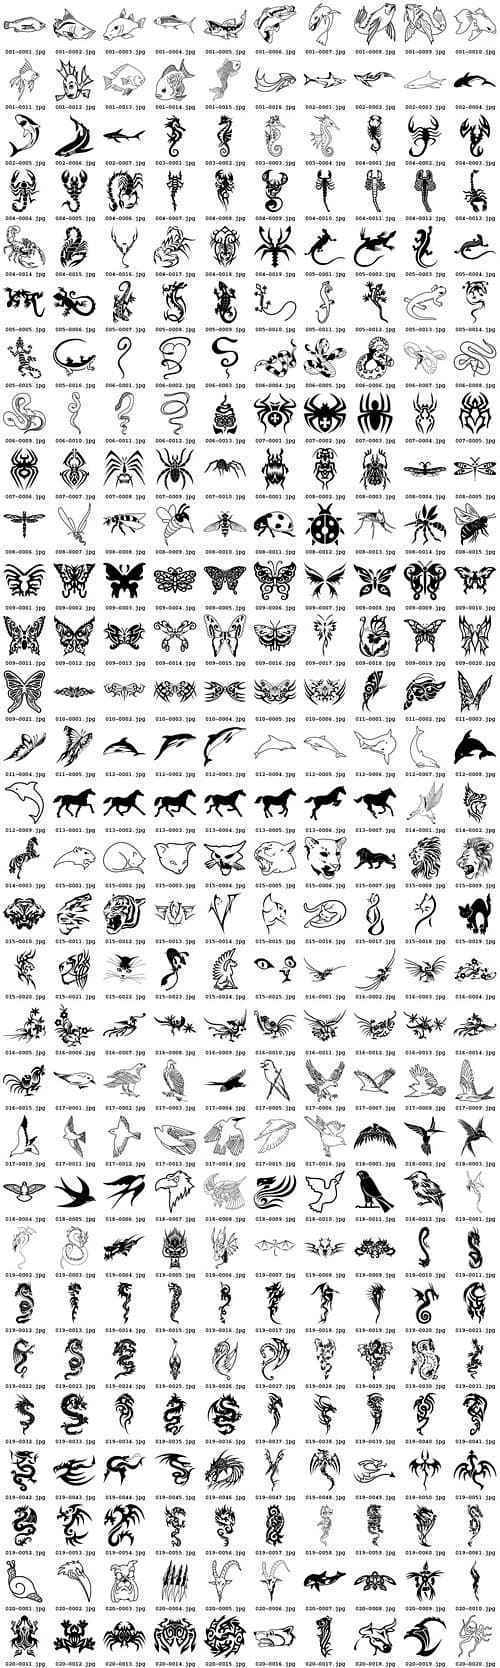 300 models of various animal totems vector material